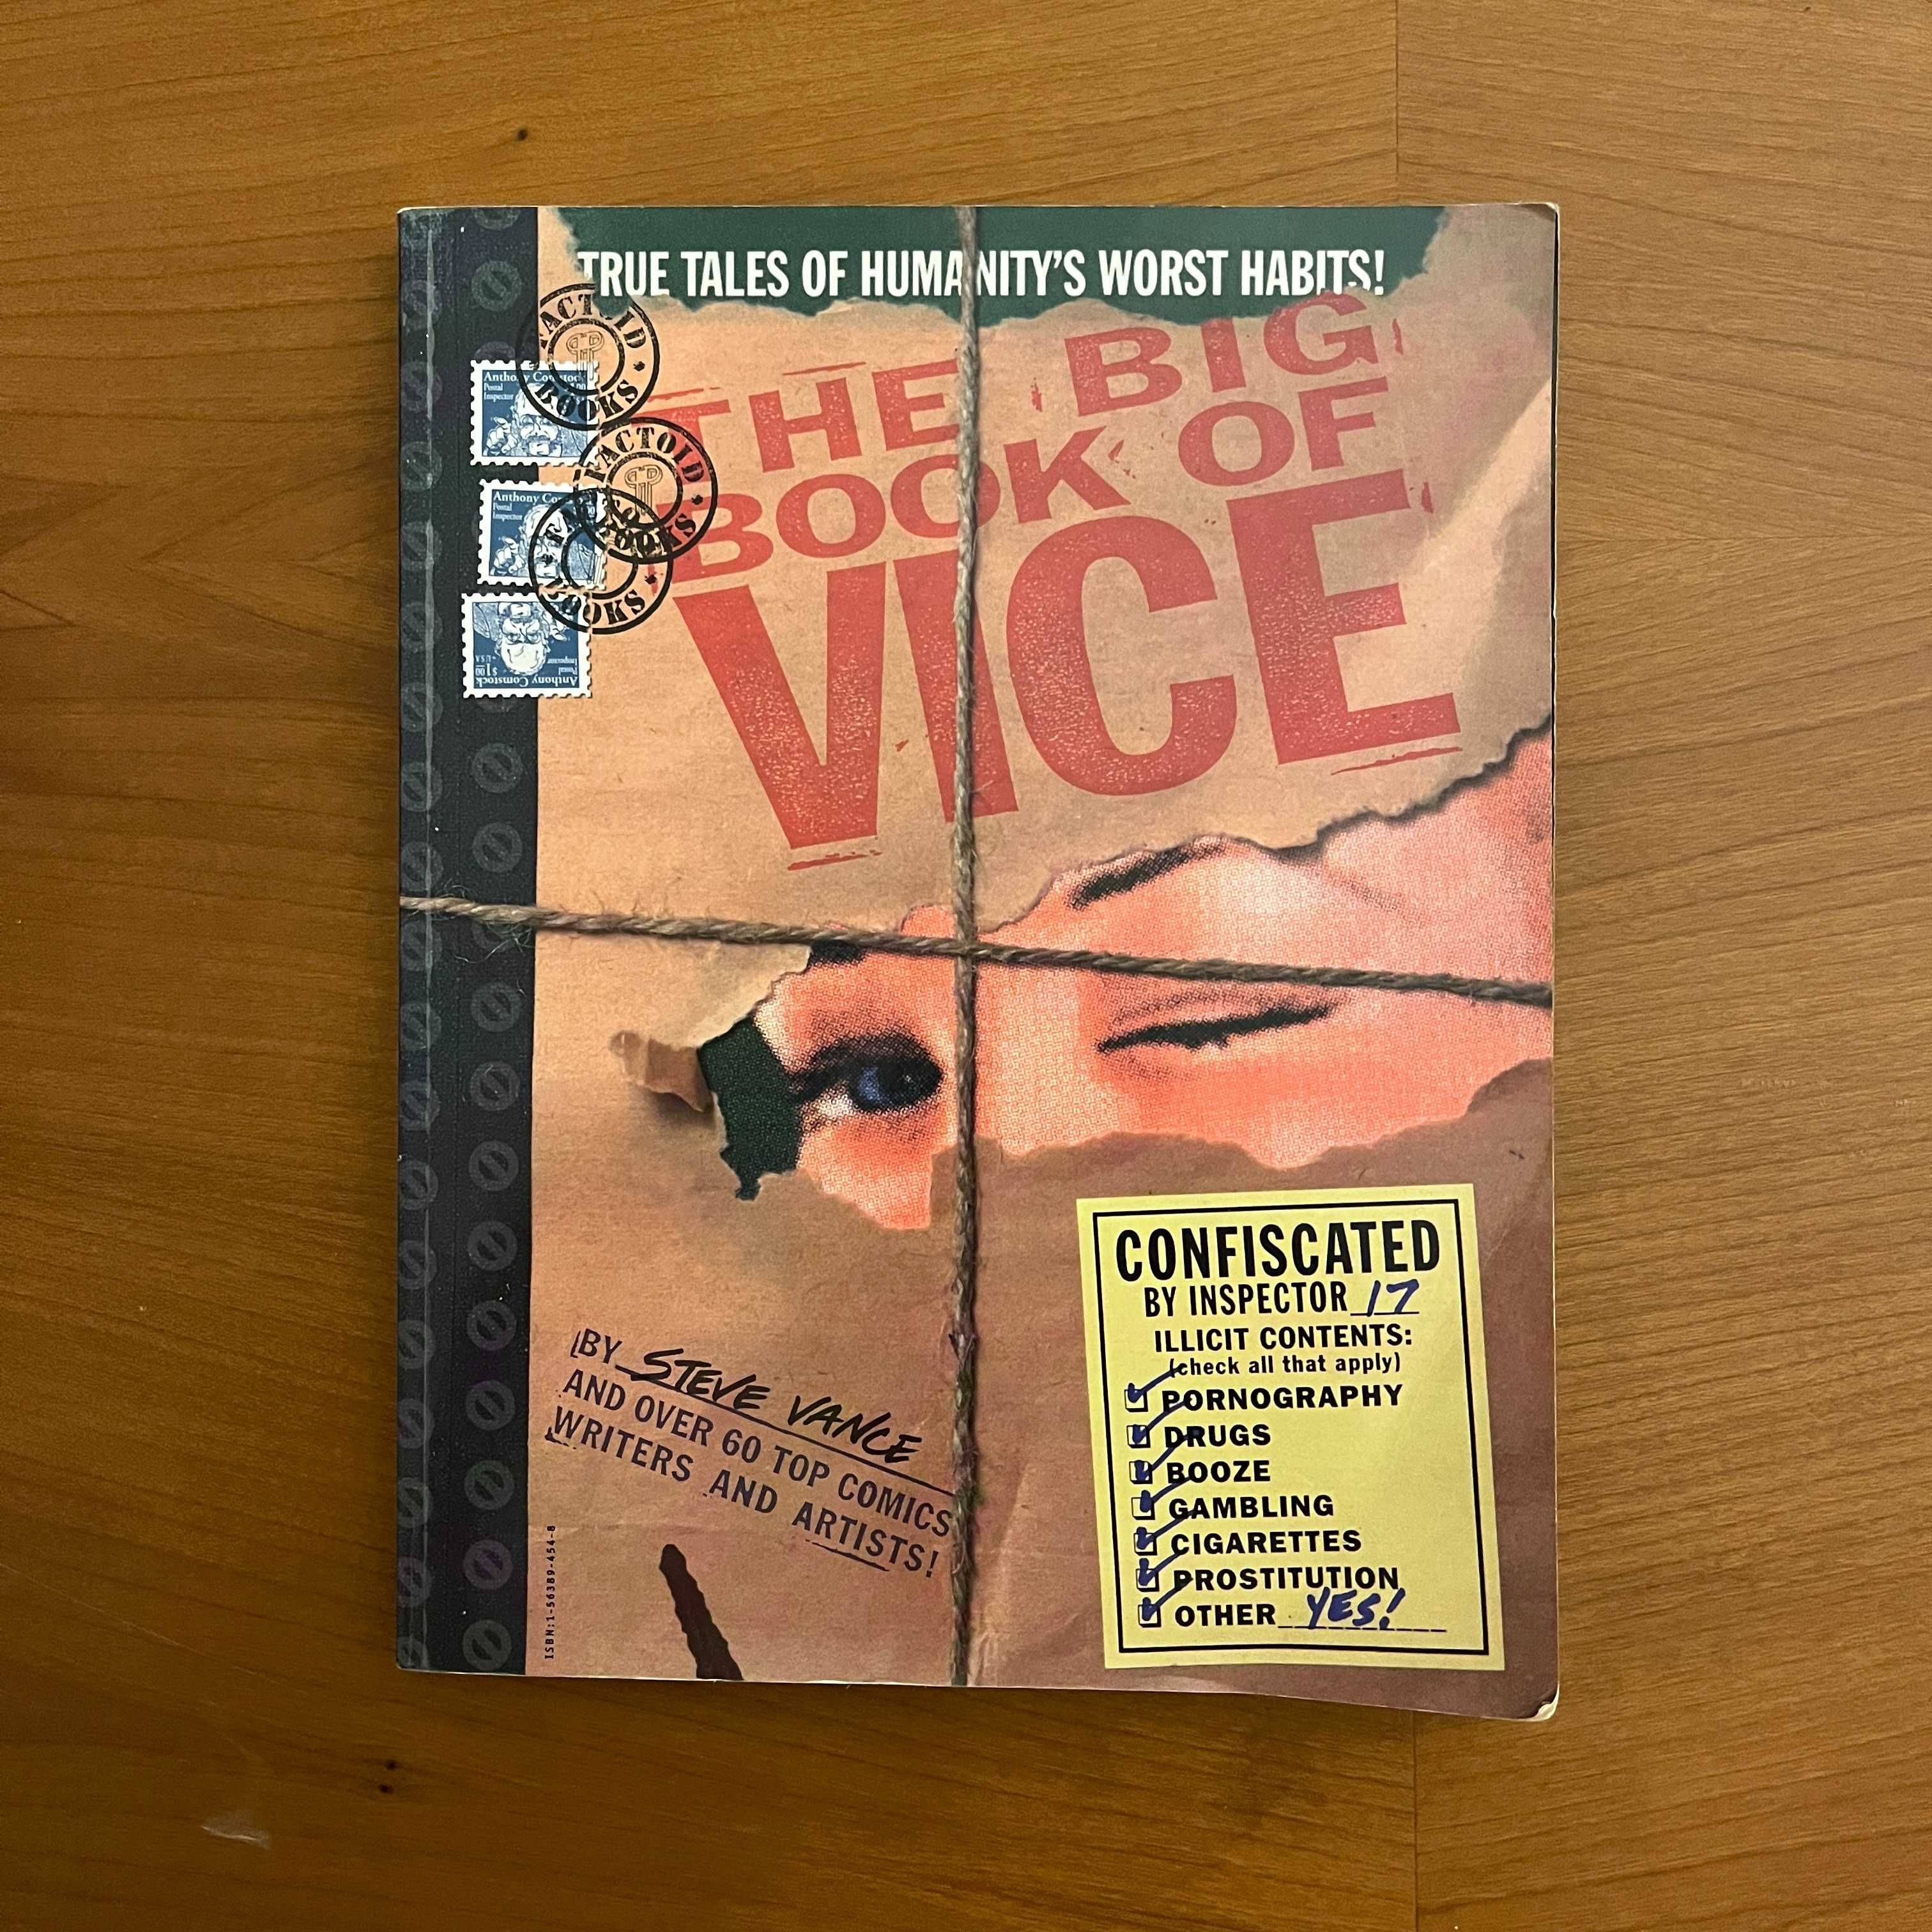 Steve Vance - The Big Book of Vice